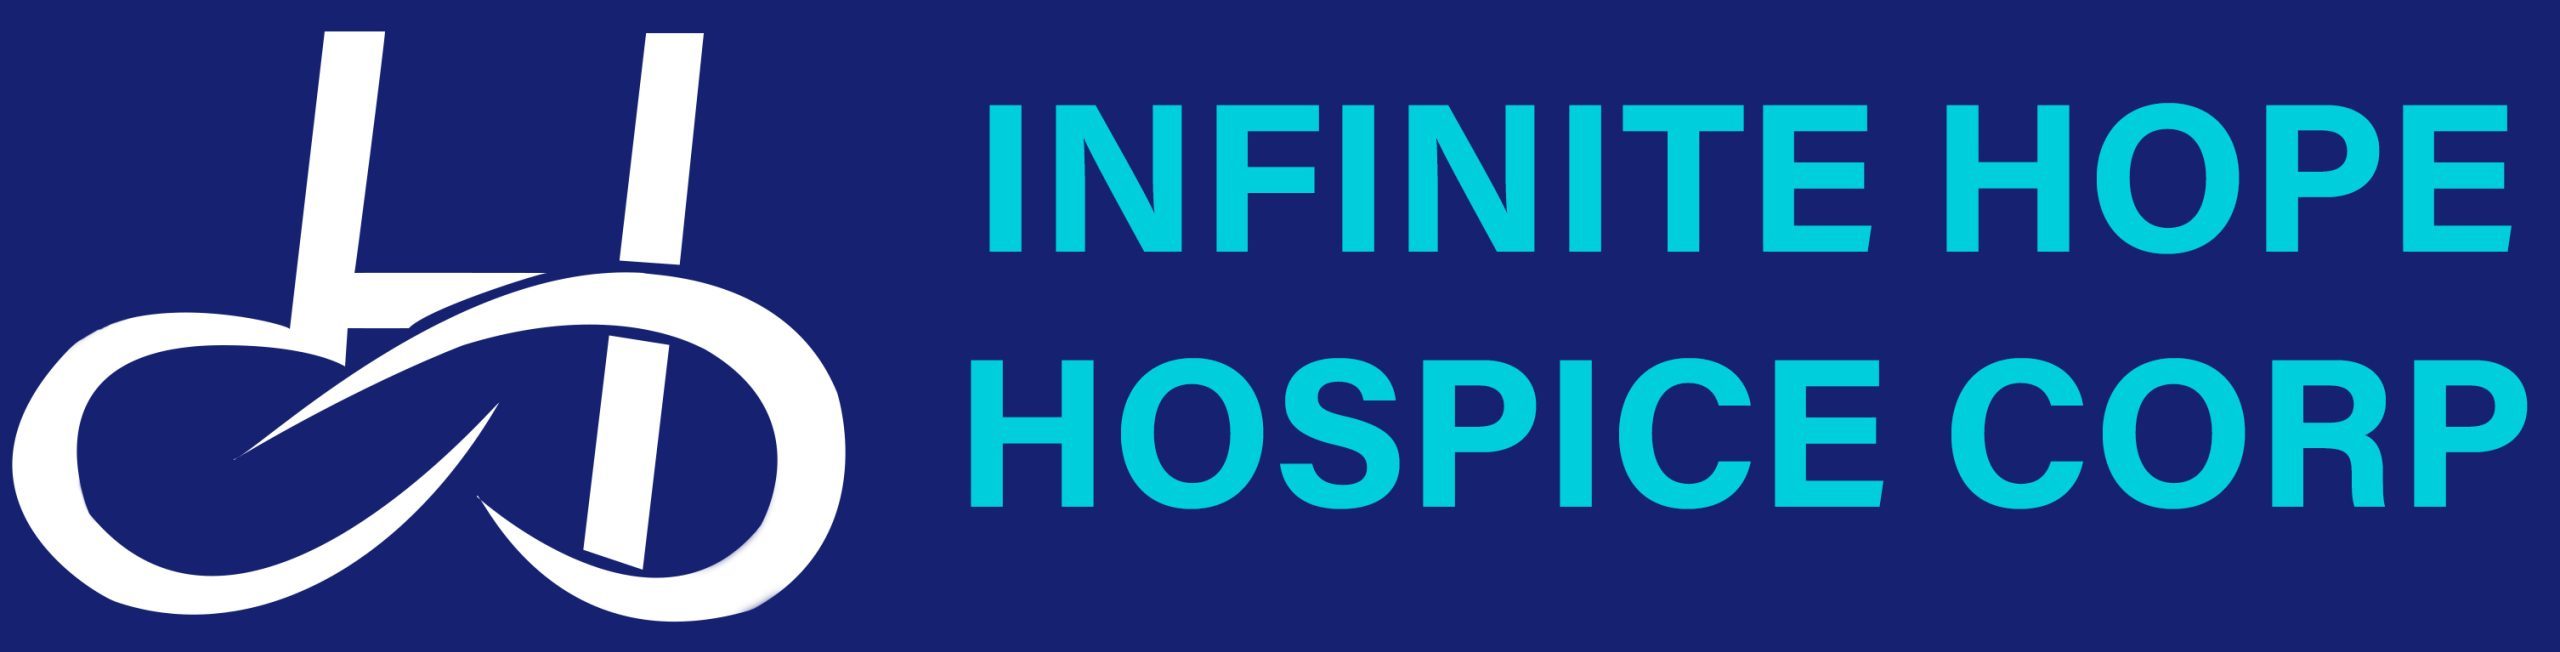 Infinite Hope Hospice